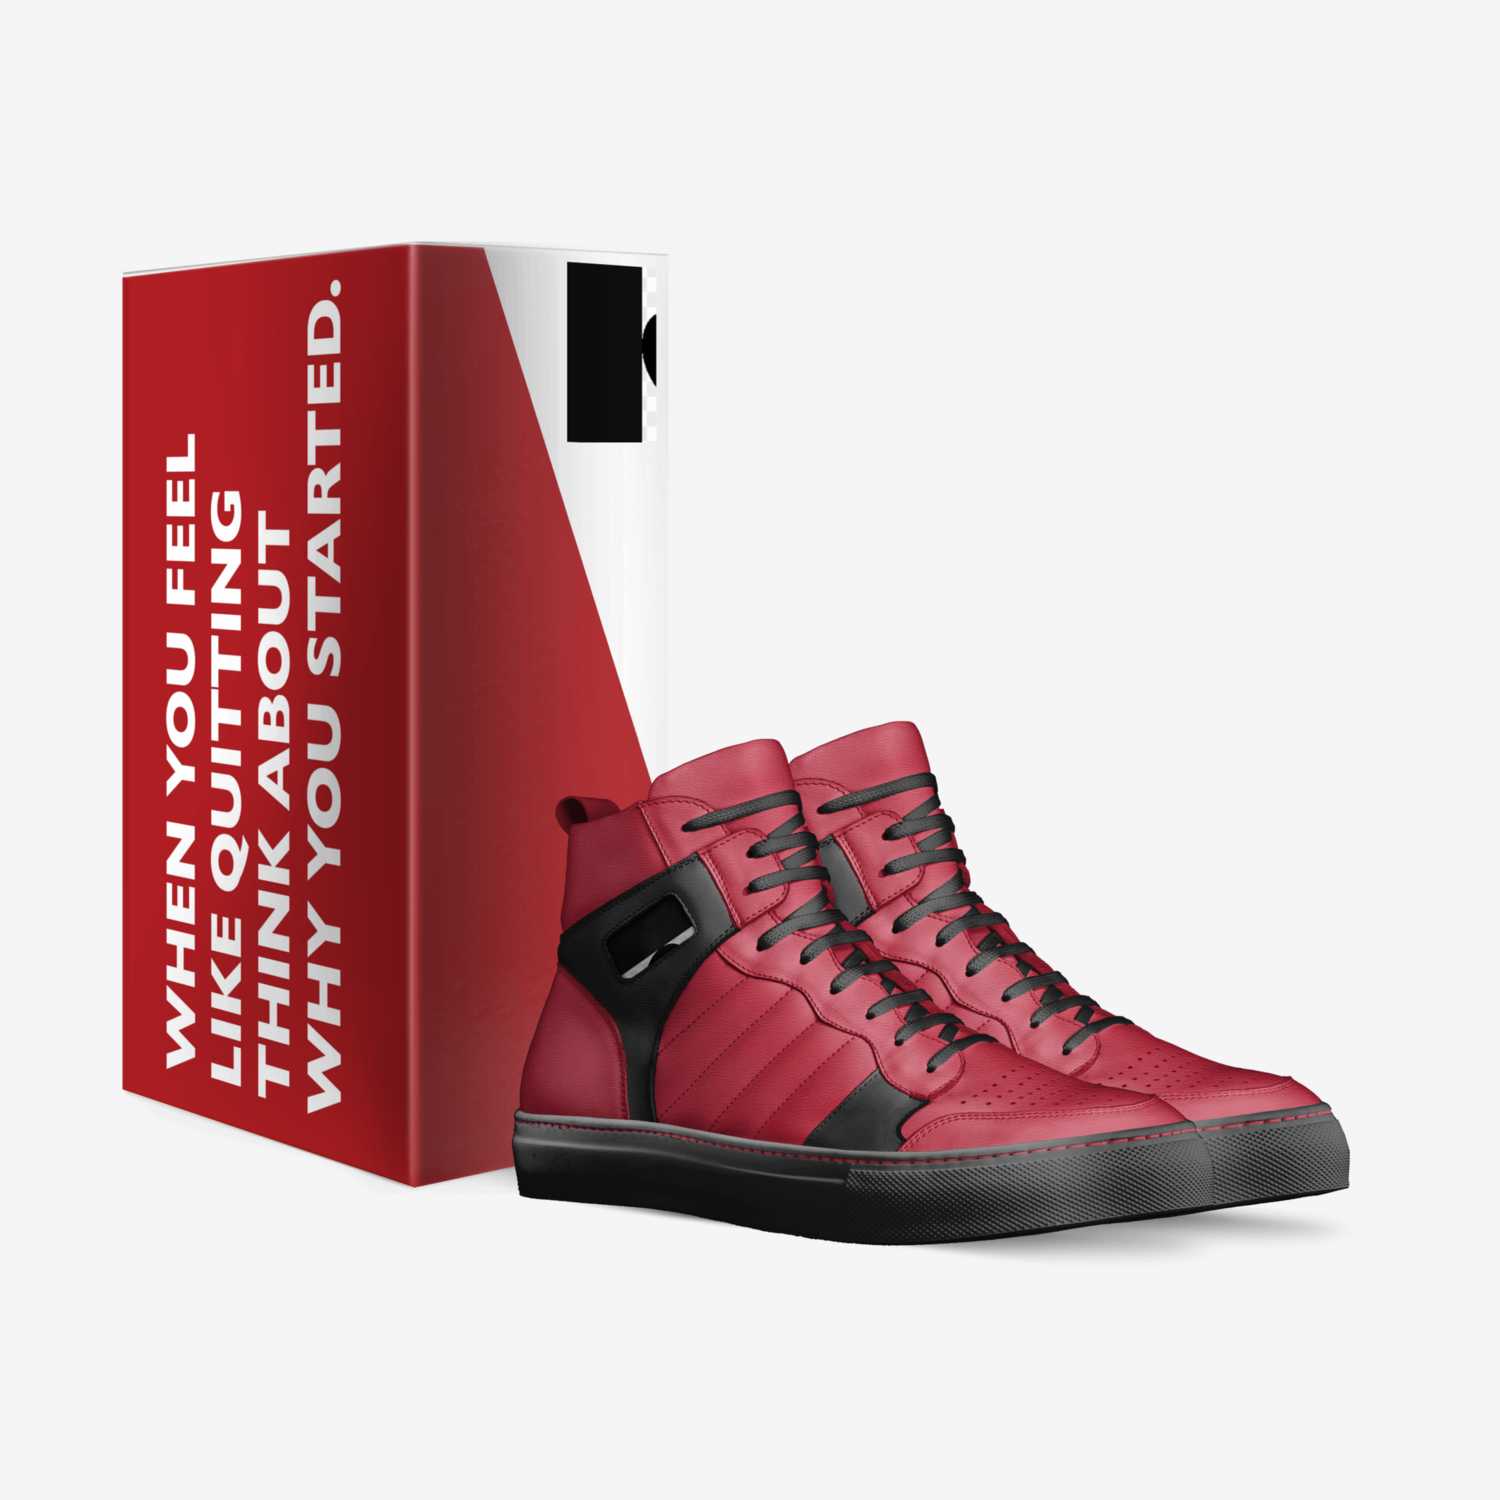 B4DAWN custom made in Italy shoes by Mason Jonas | Box view